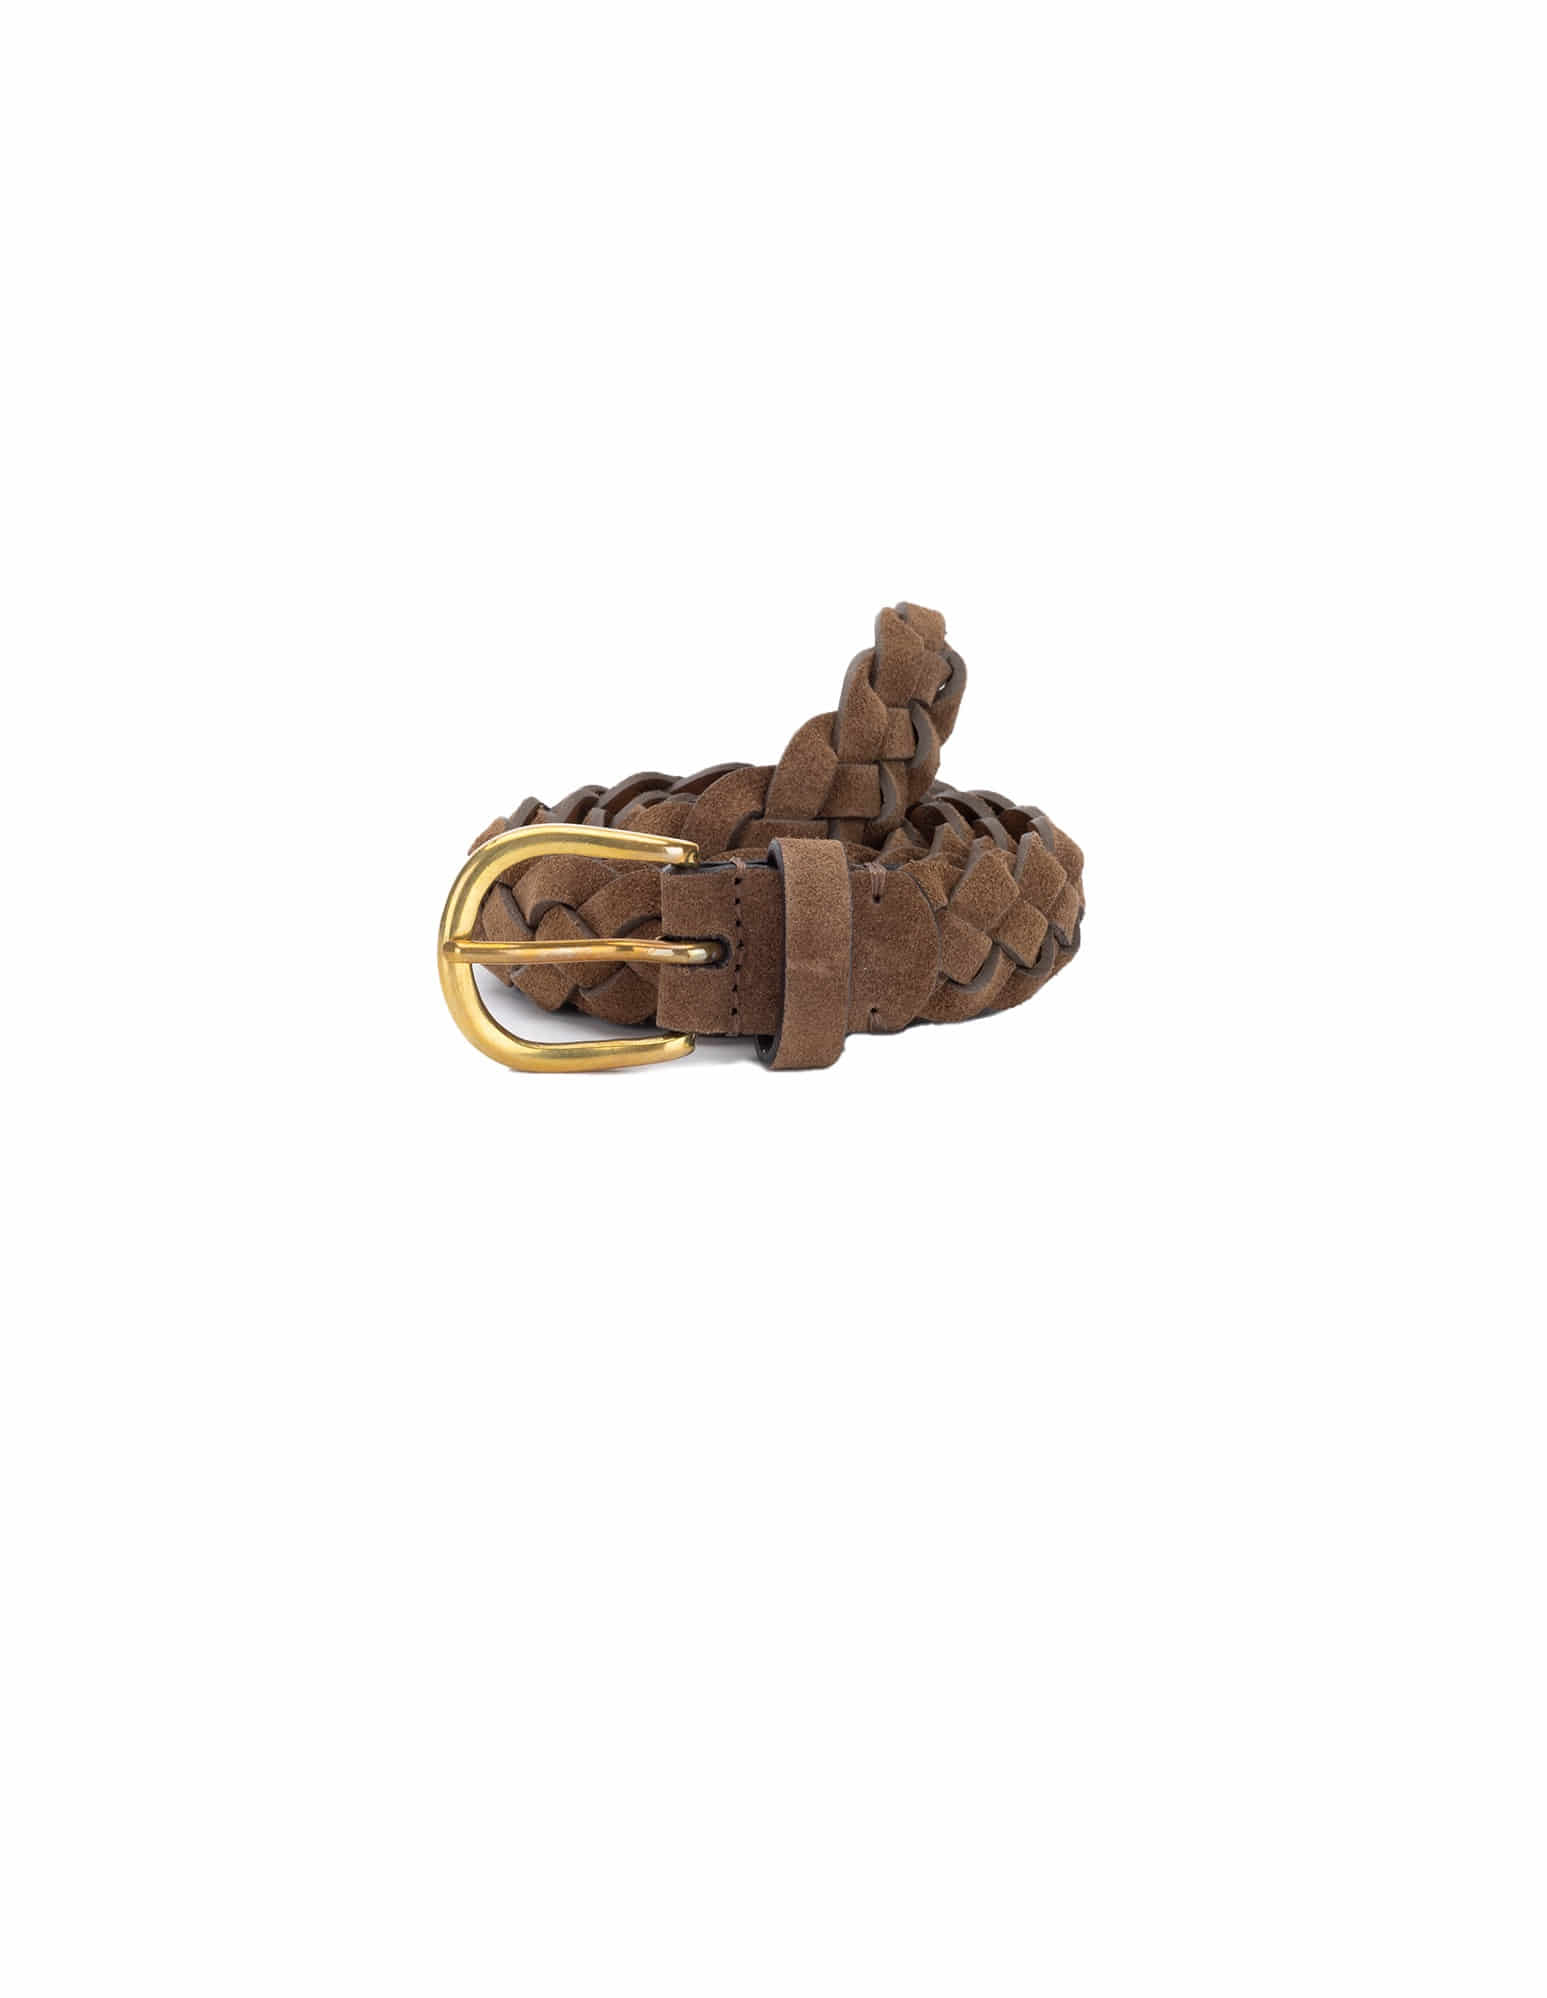 Suede Woven Brass Belt 25mm (Brown)